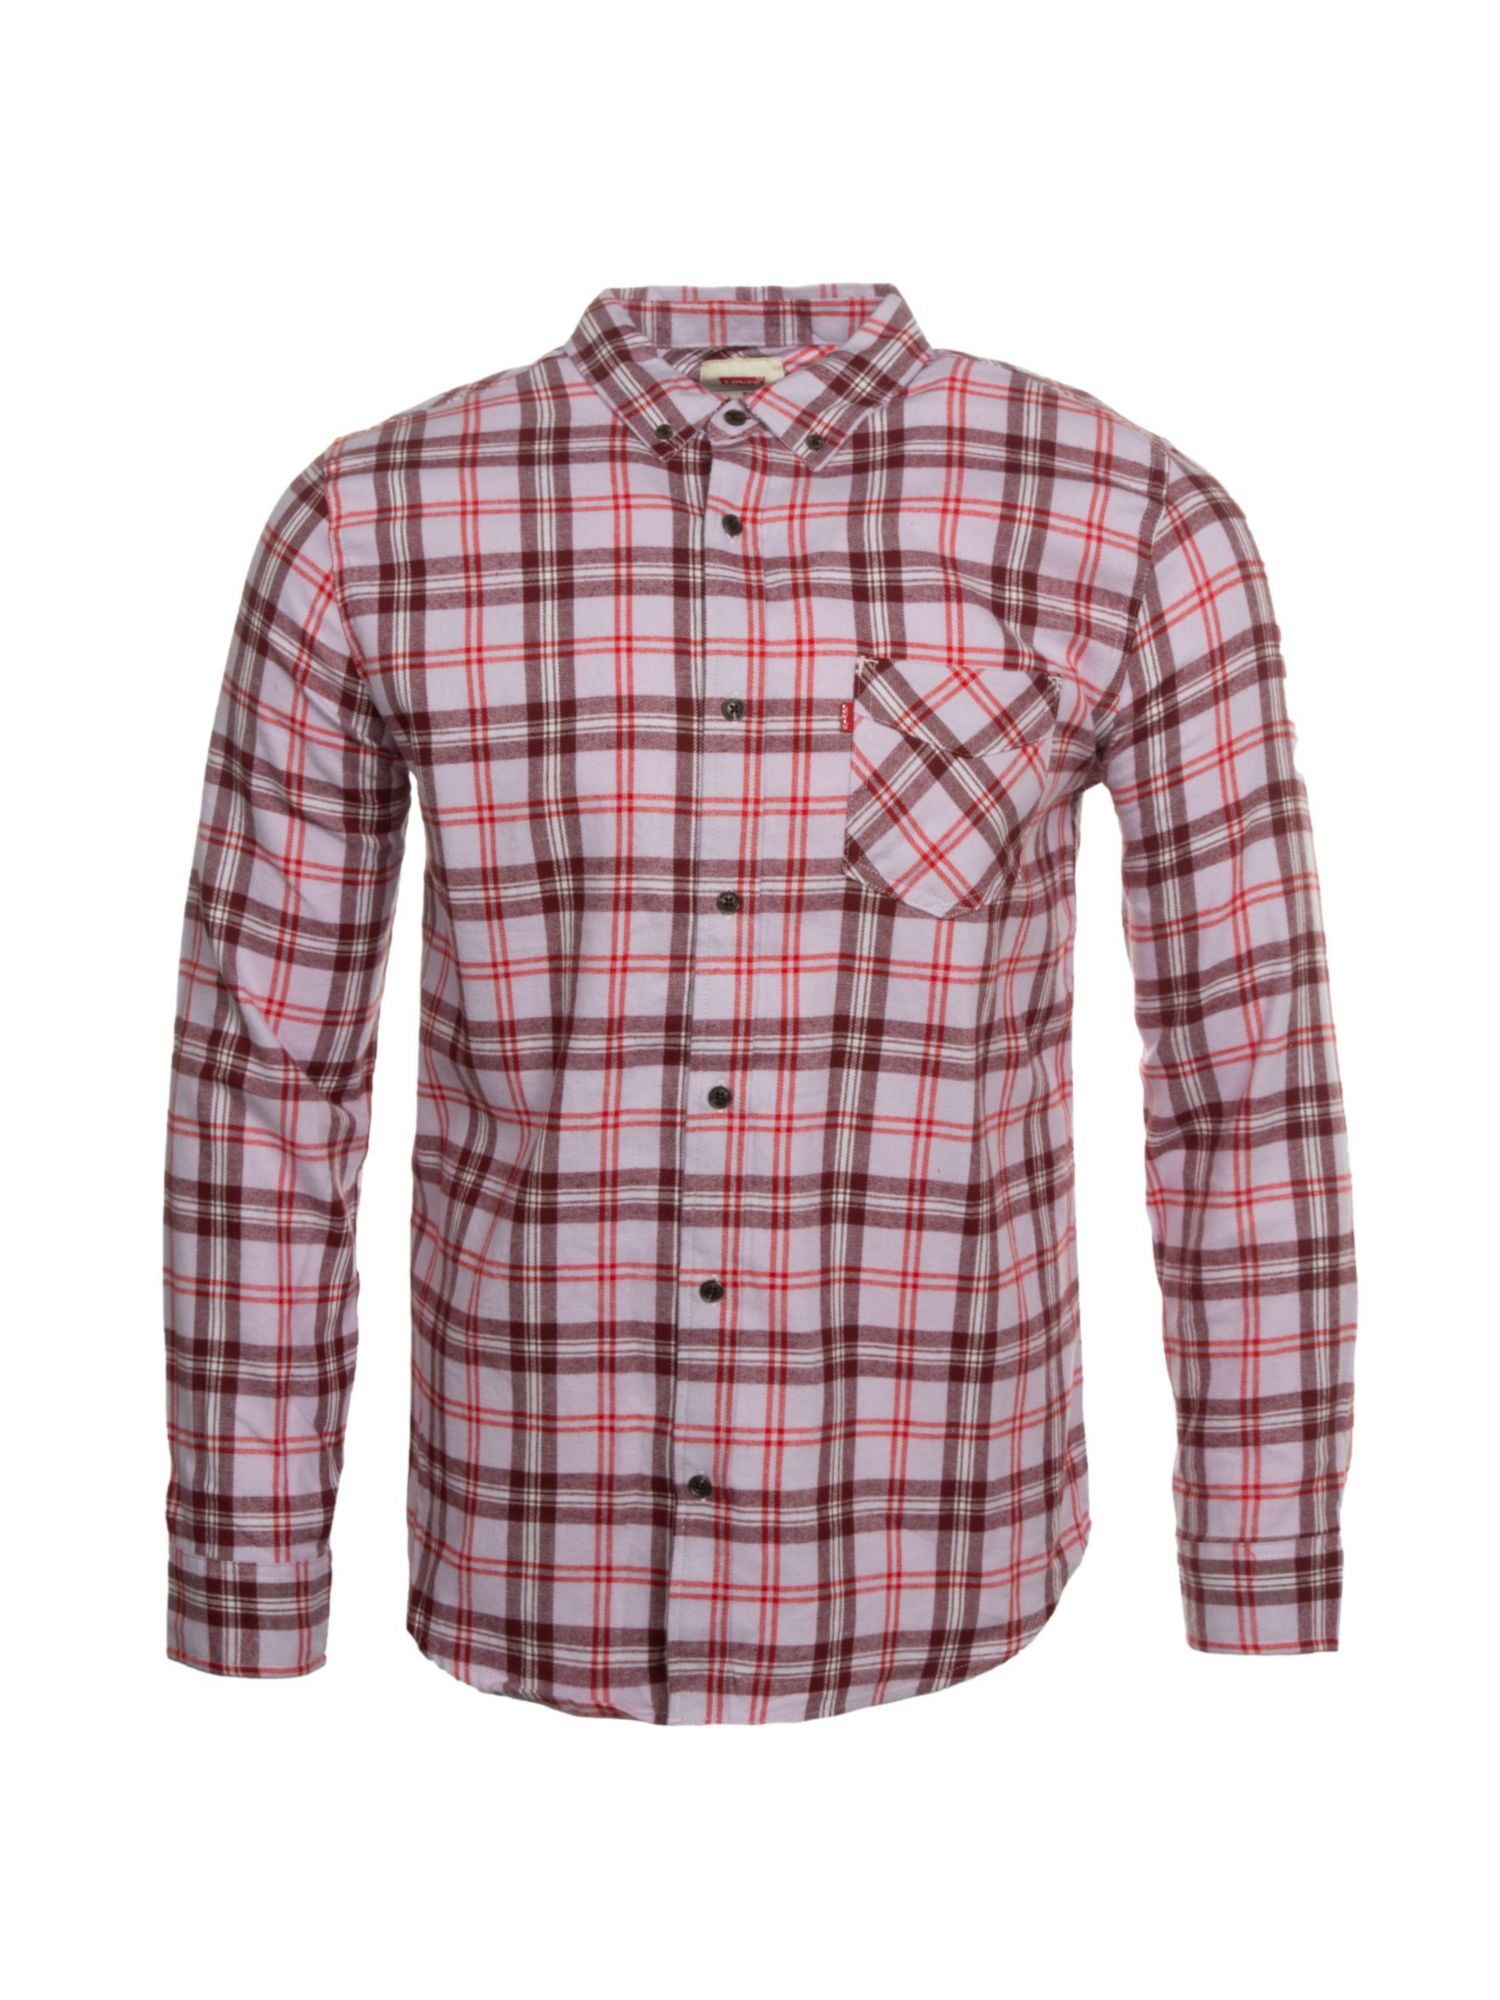 LEVI'S Mens Pink Plaid Long Sleeve Classic Fit Button Down Cotton Casual  Shirt L 